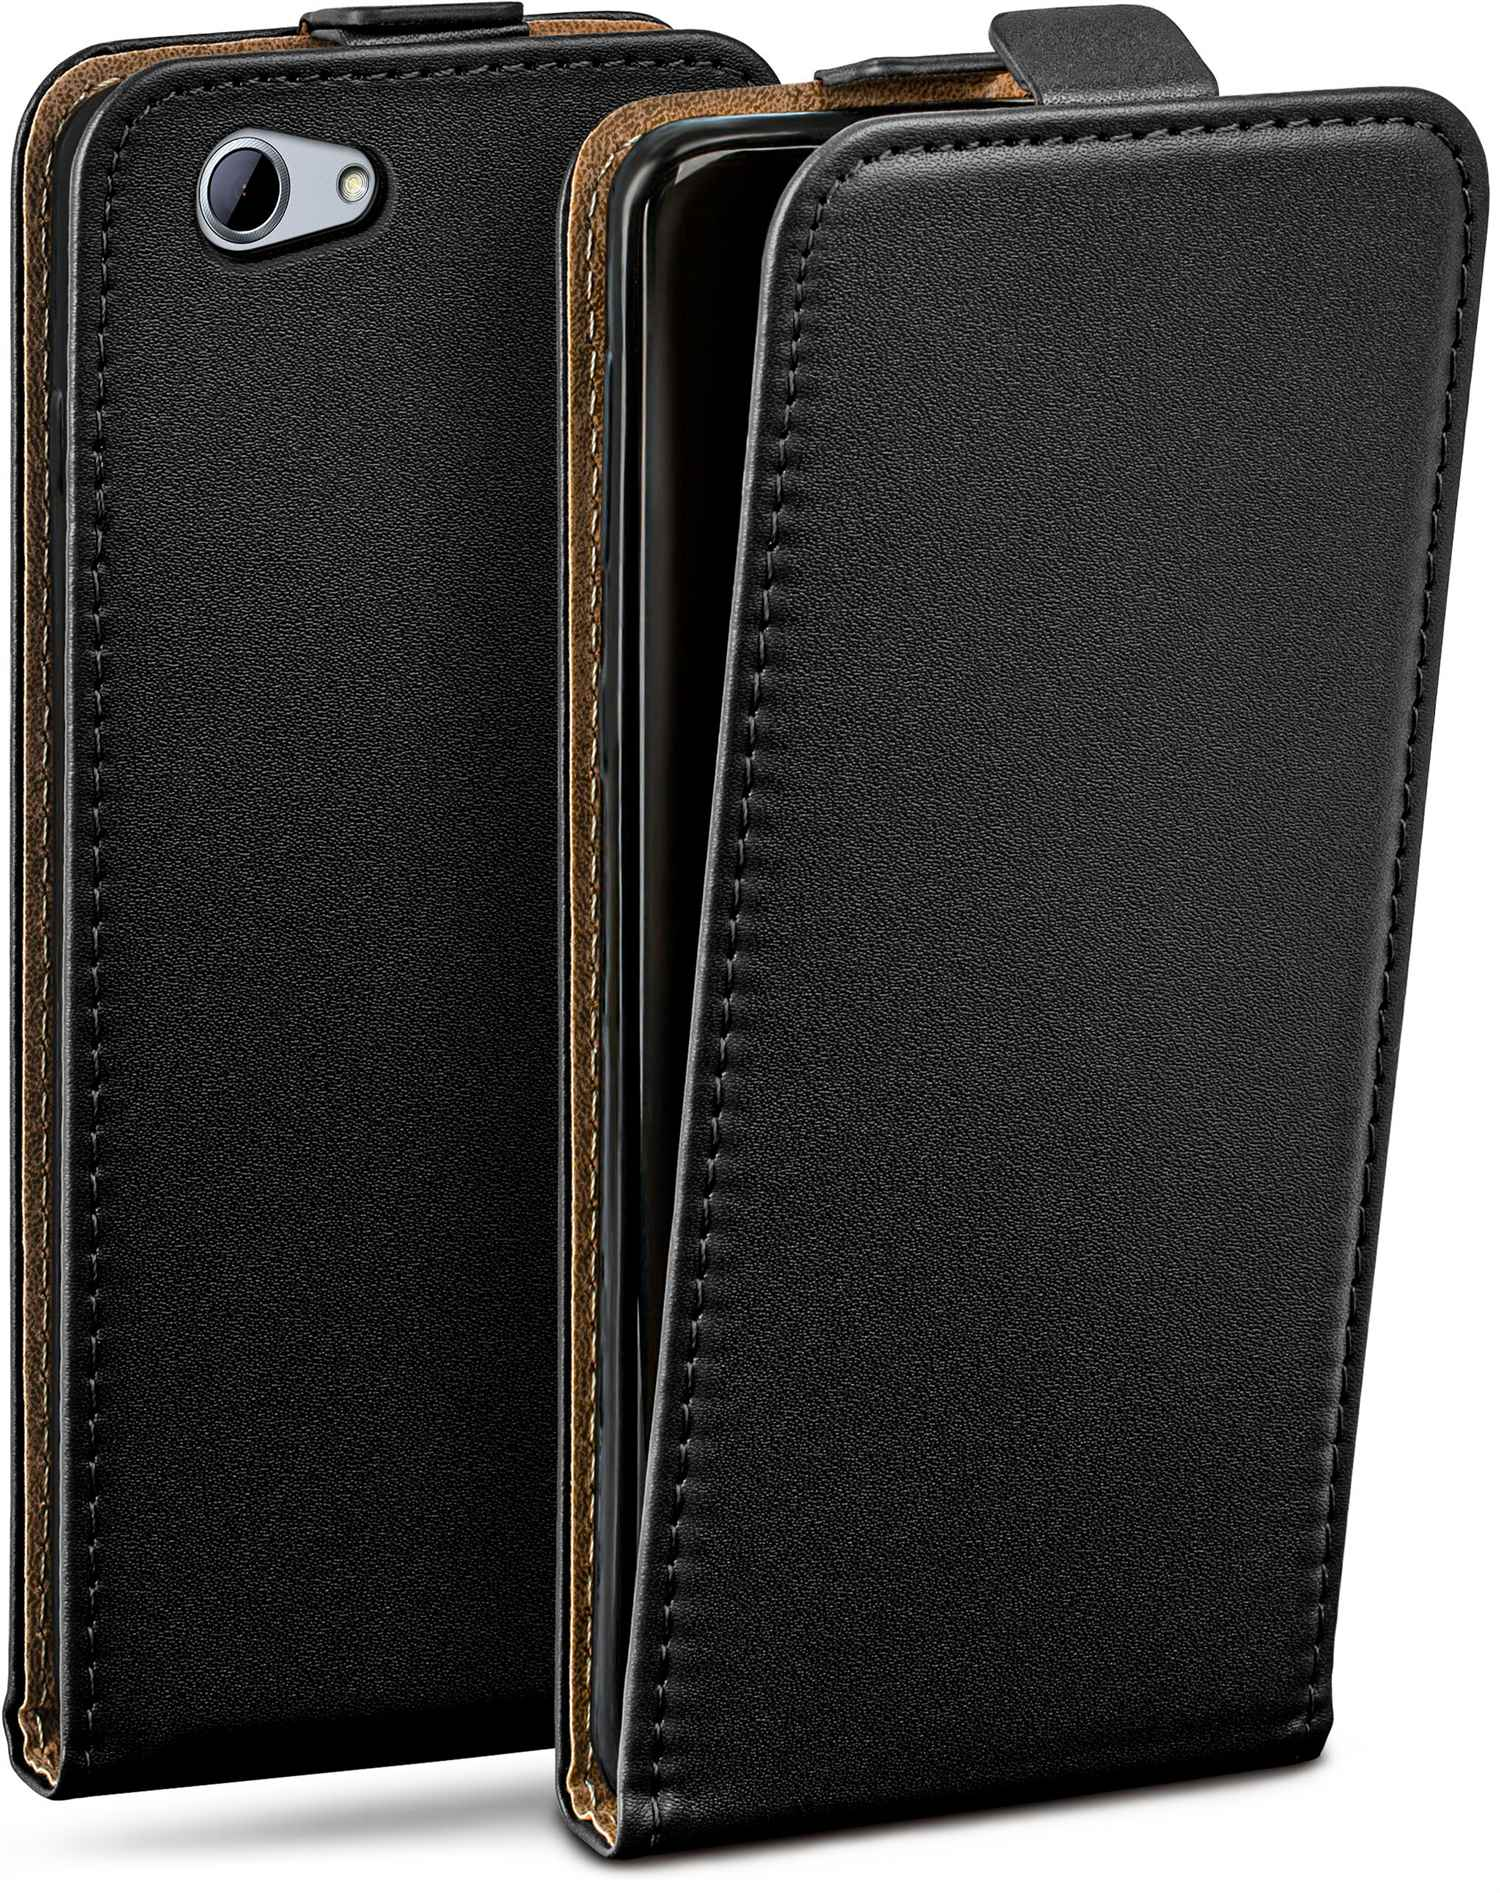 A9s, HTC, One Case, Flip Deep-Black Cover, MOEX Flip